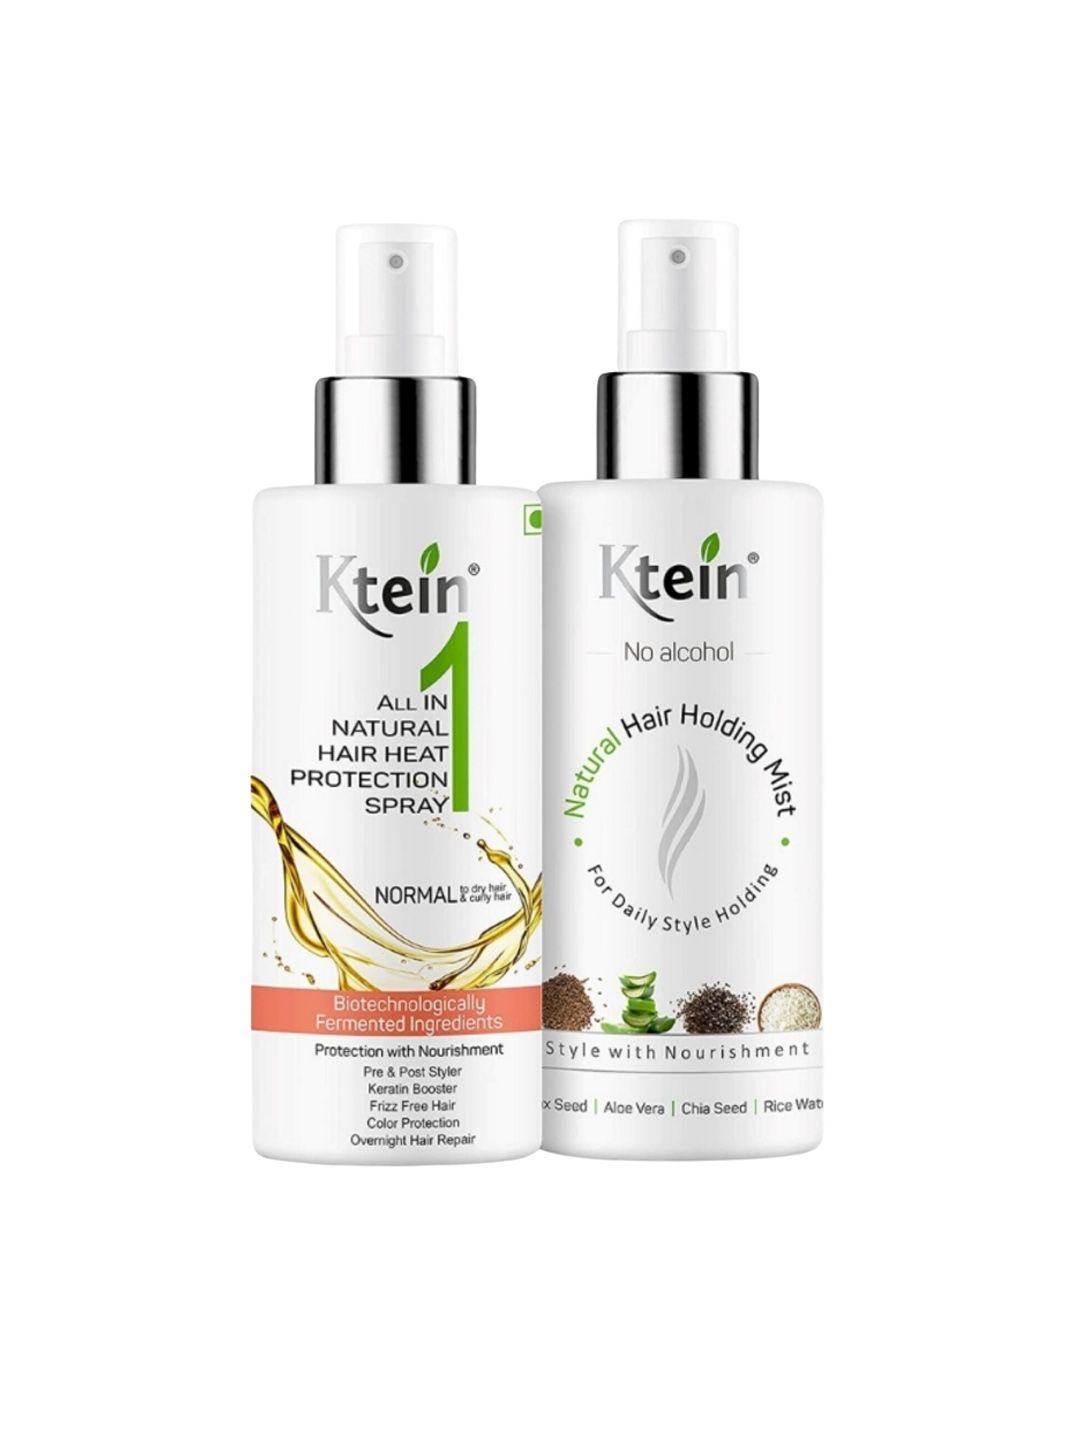 ktein natural all in 1 heat protection spray & ktein hair holding spray 200ml